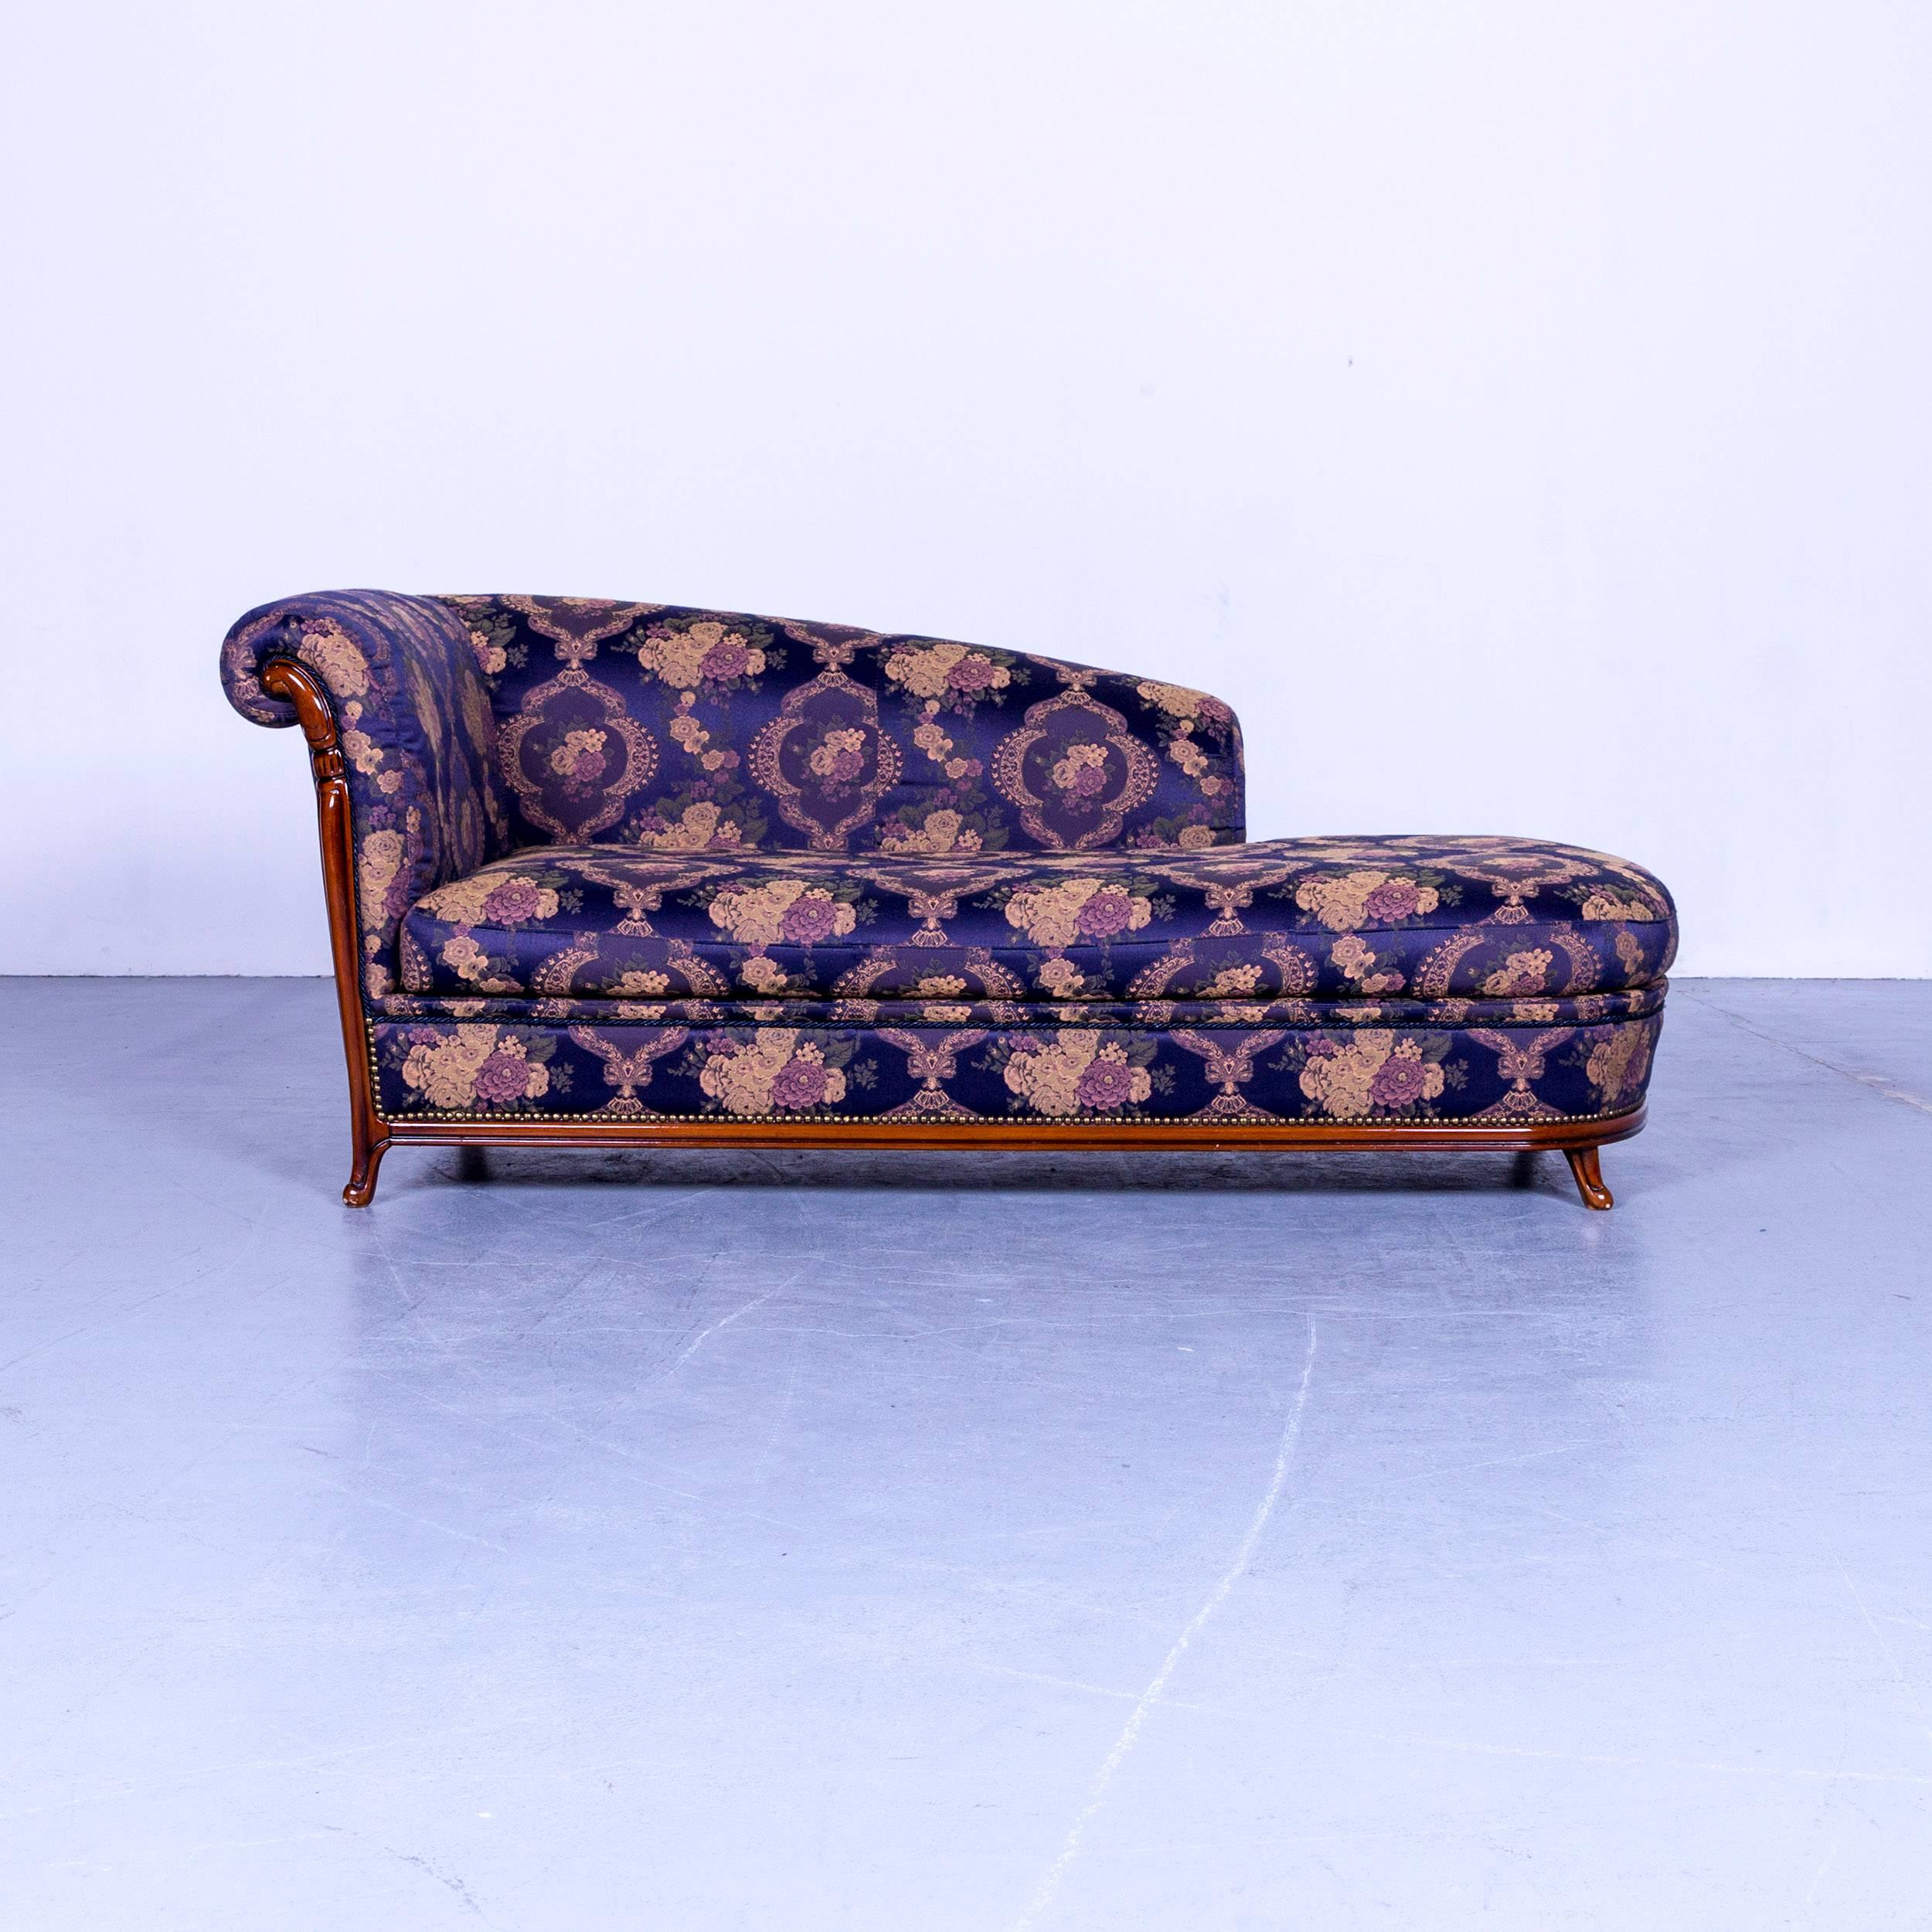 Nieri Palatino designer sofa purple blue fabric three-seat couch flowers made in Italy.
 